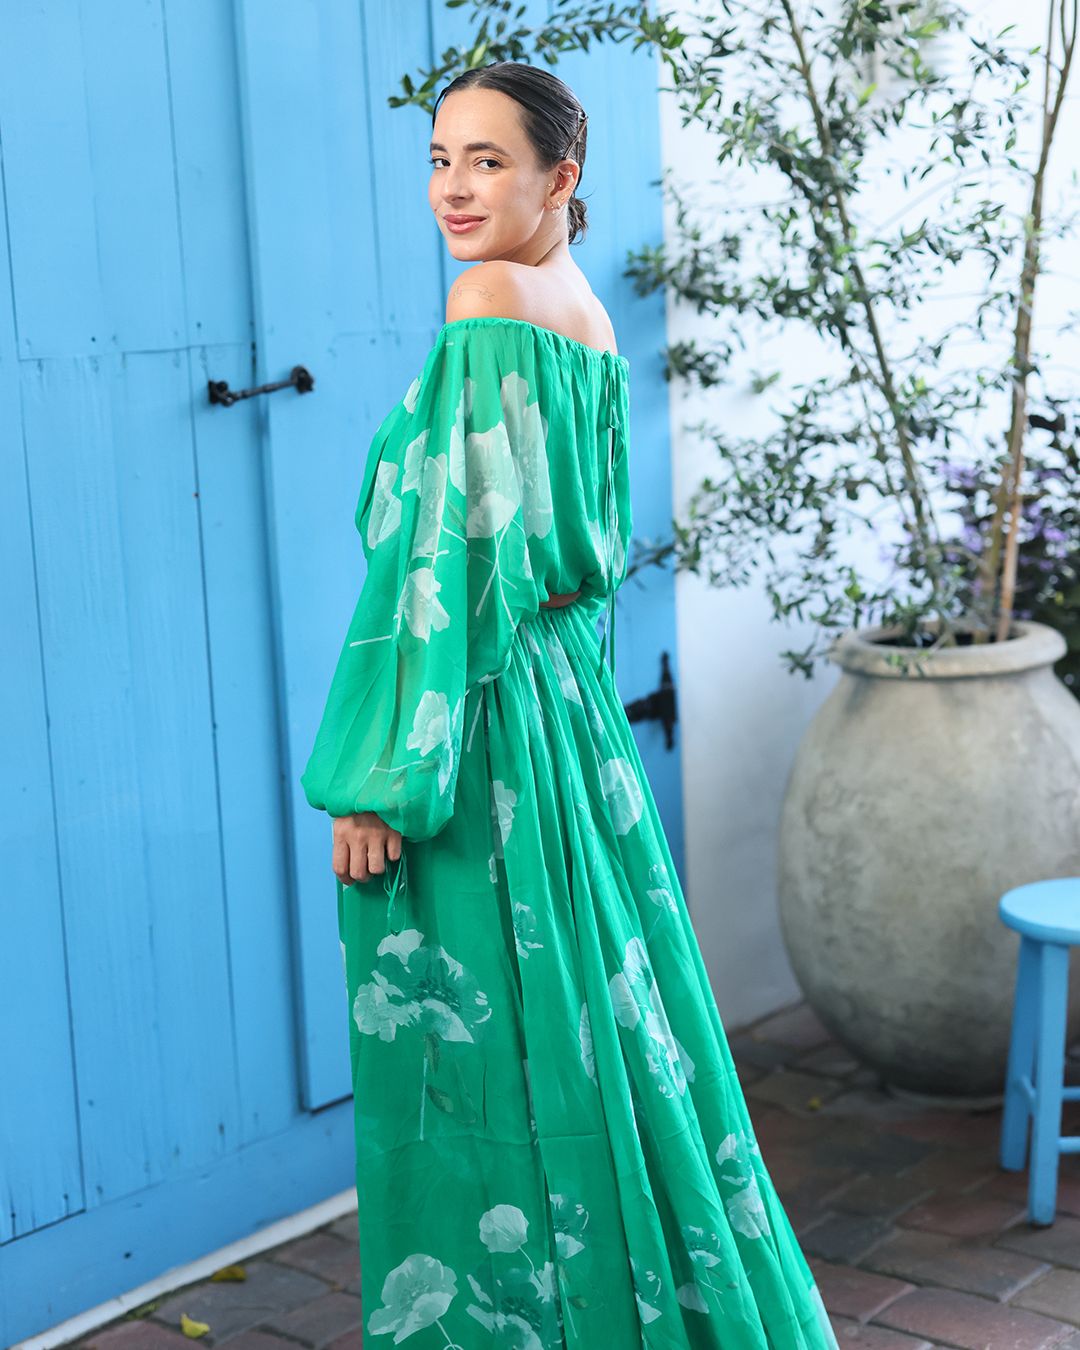 Woman looking over shoulder at camera wearing off-shoulder green floral print dress in front of blue door